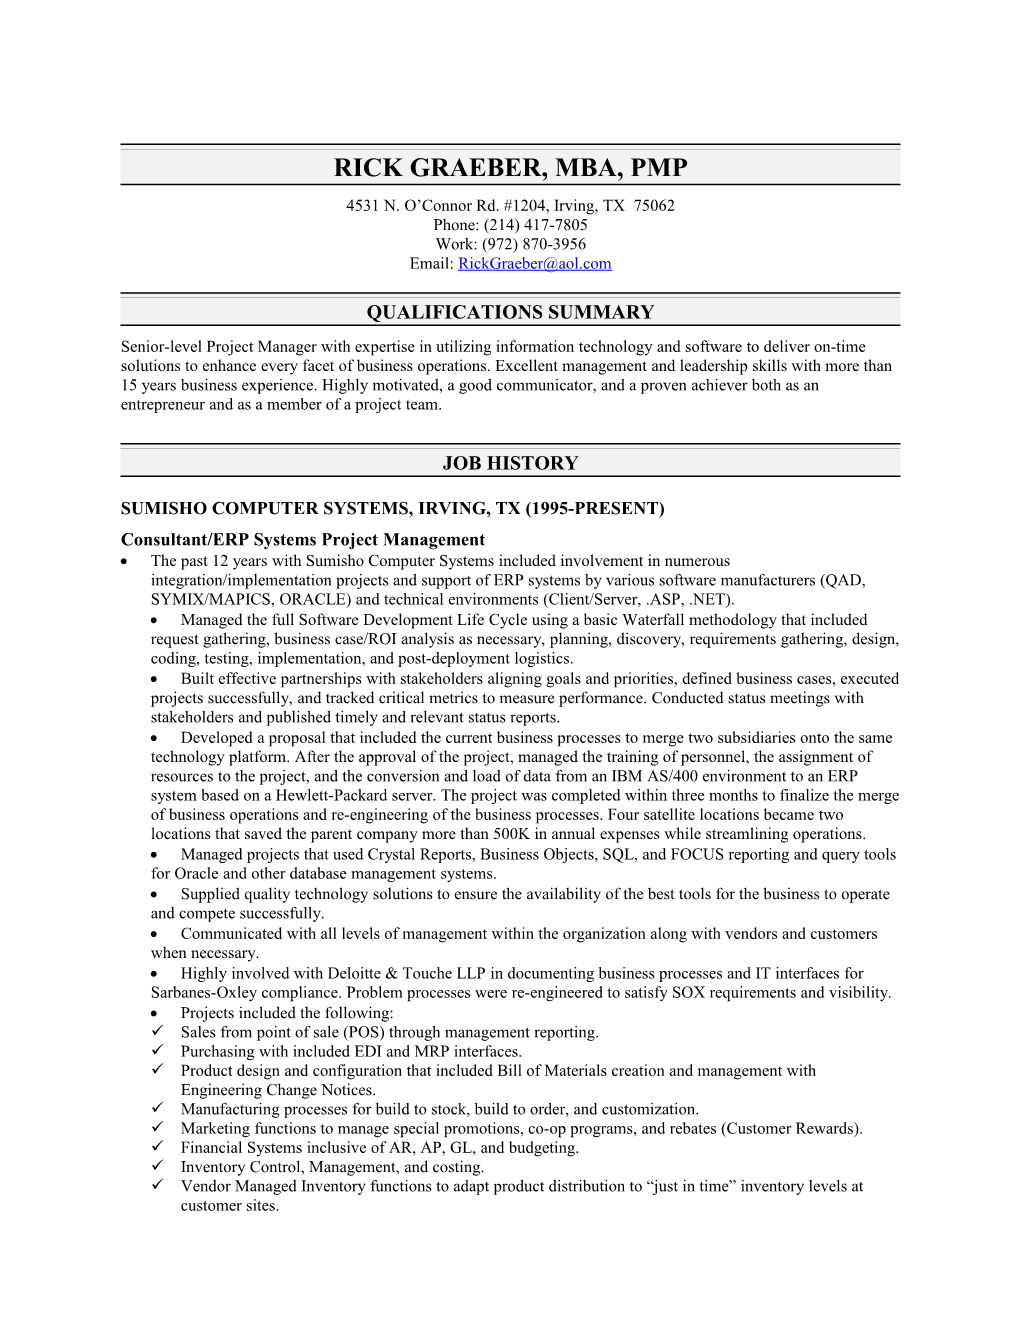 Resume of Rick Graeber